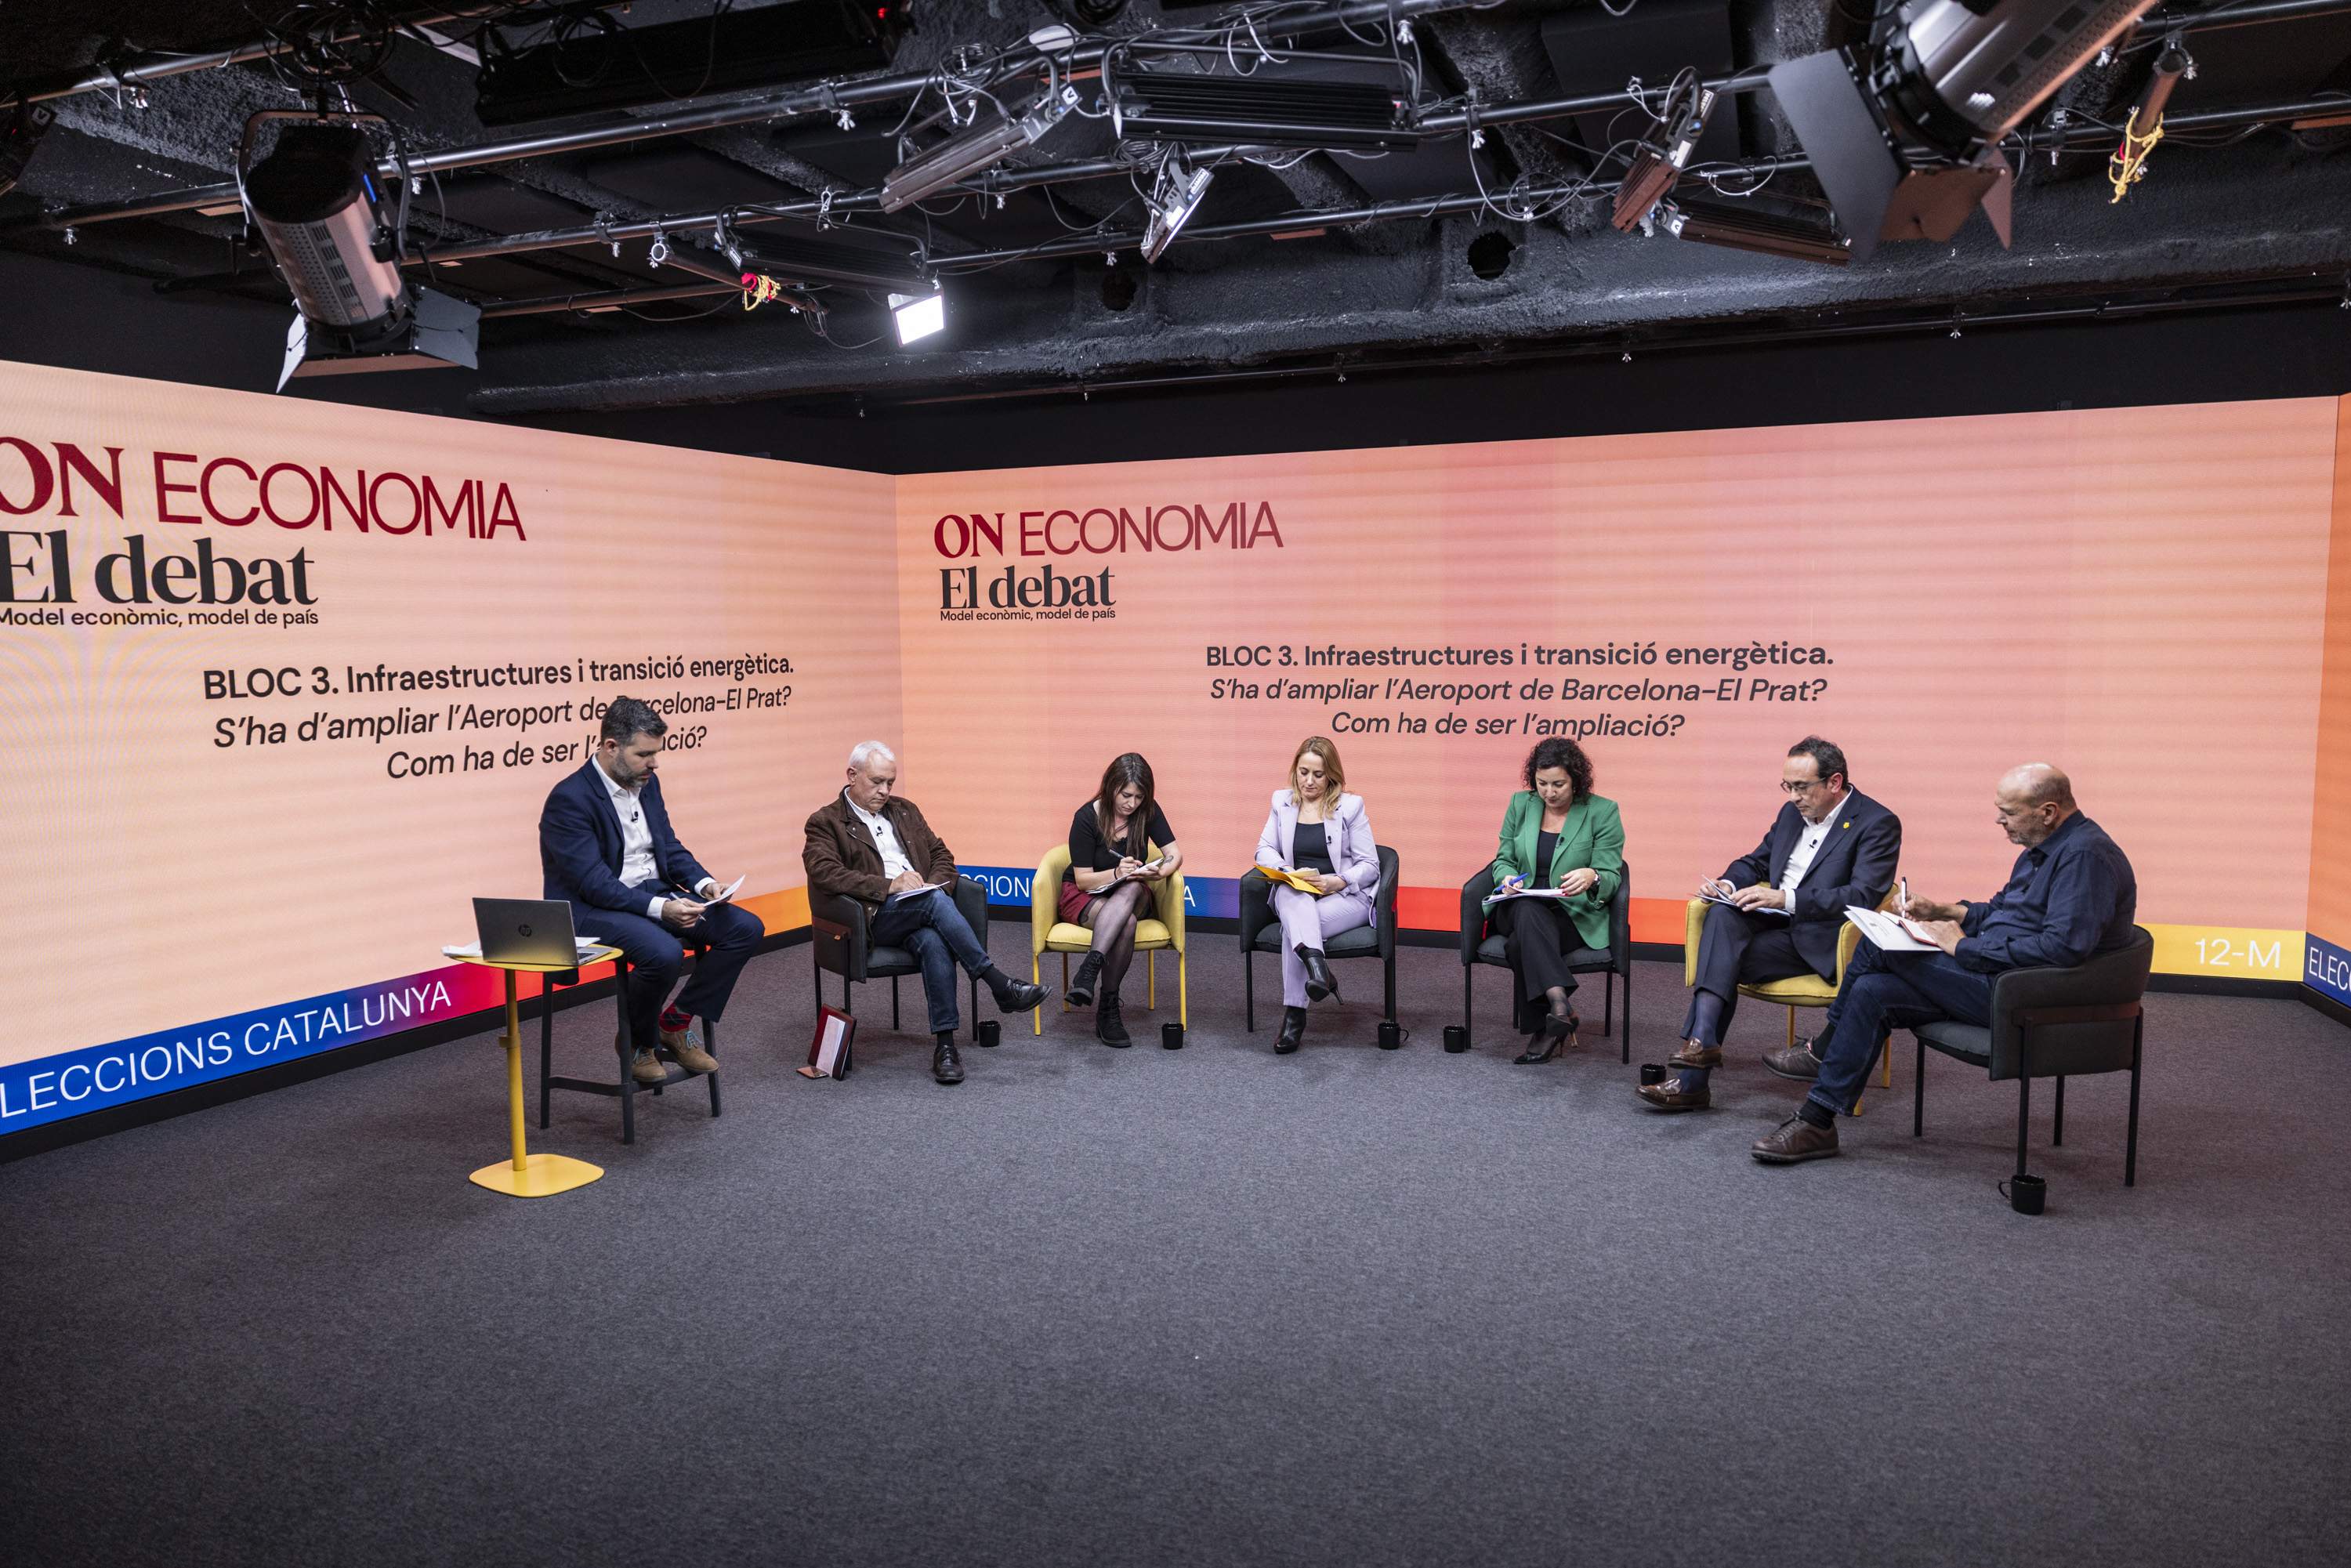 BLOC 3 Debat oneconomia politics romero, gallego, rull, mas, rodriguez, vega / Foto: Carlos Baglietto